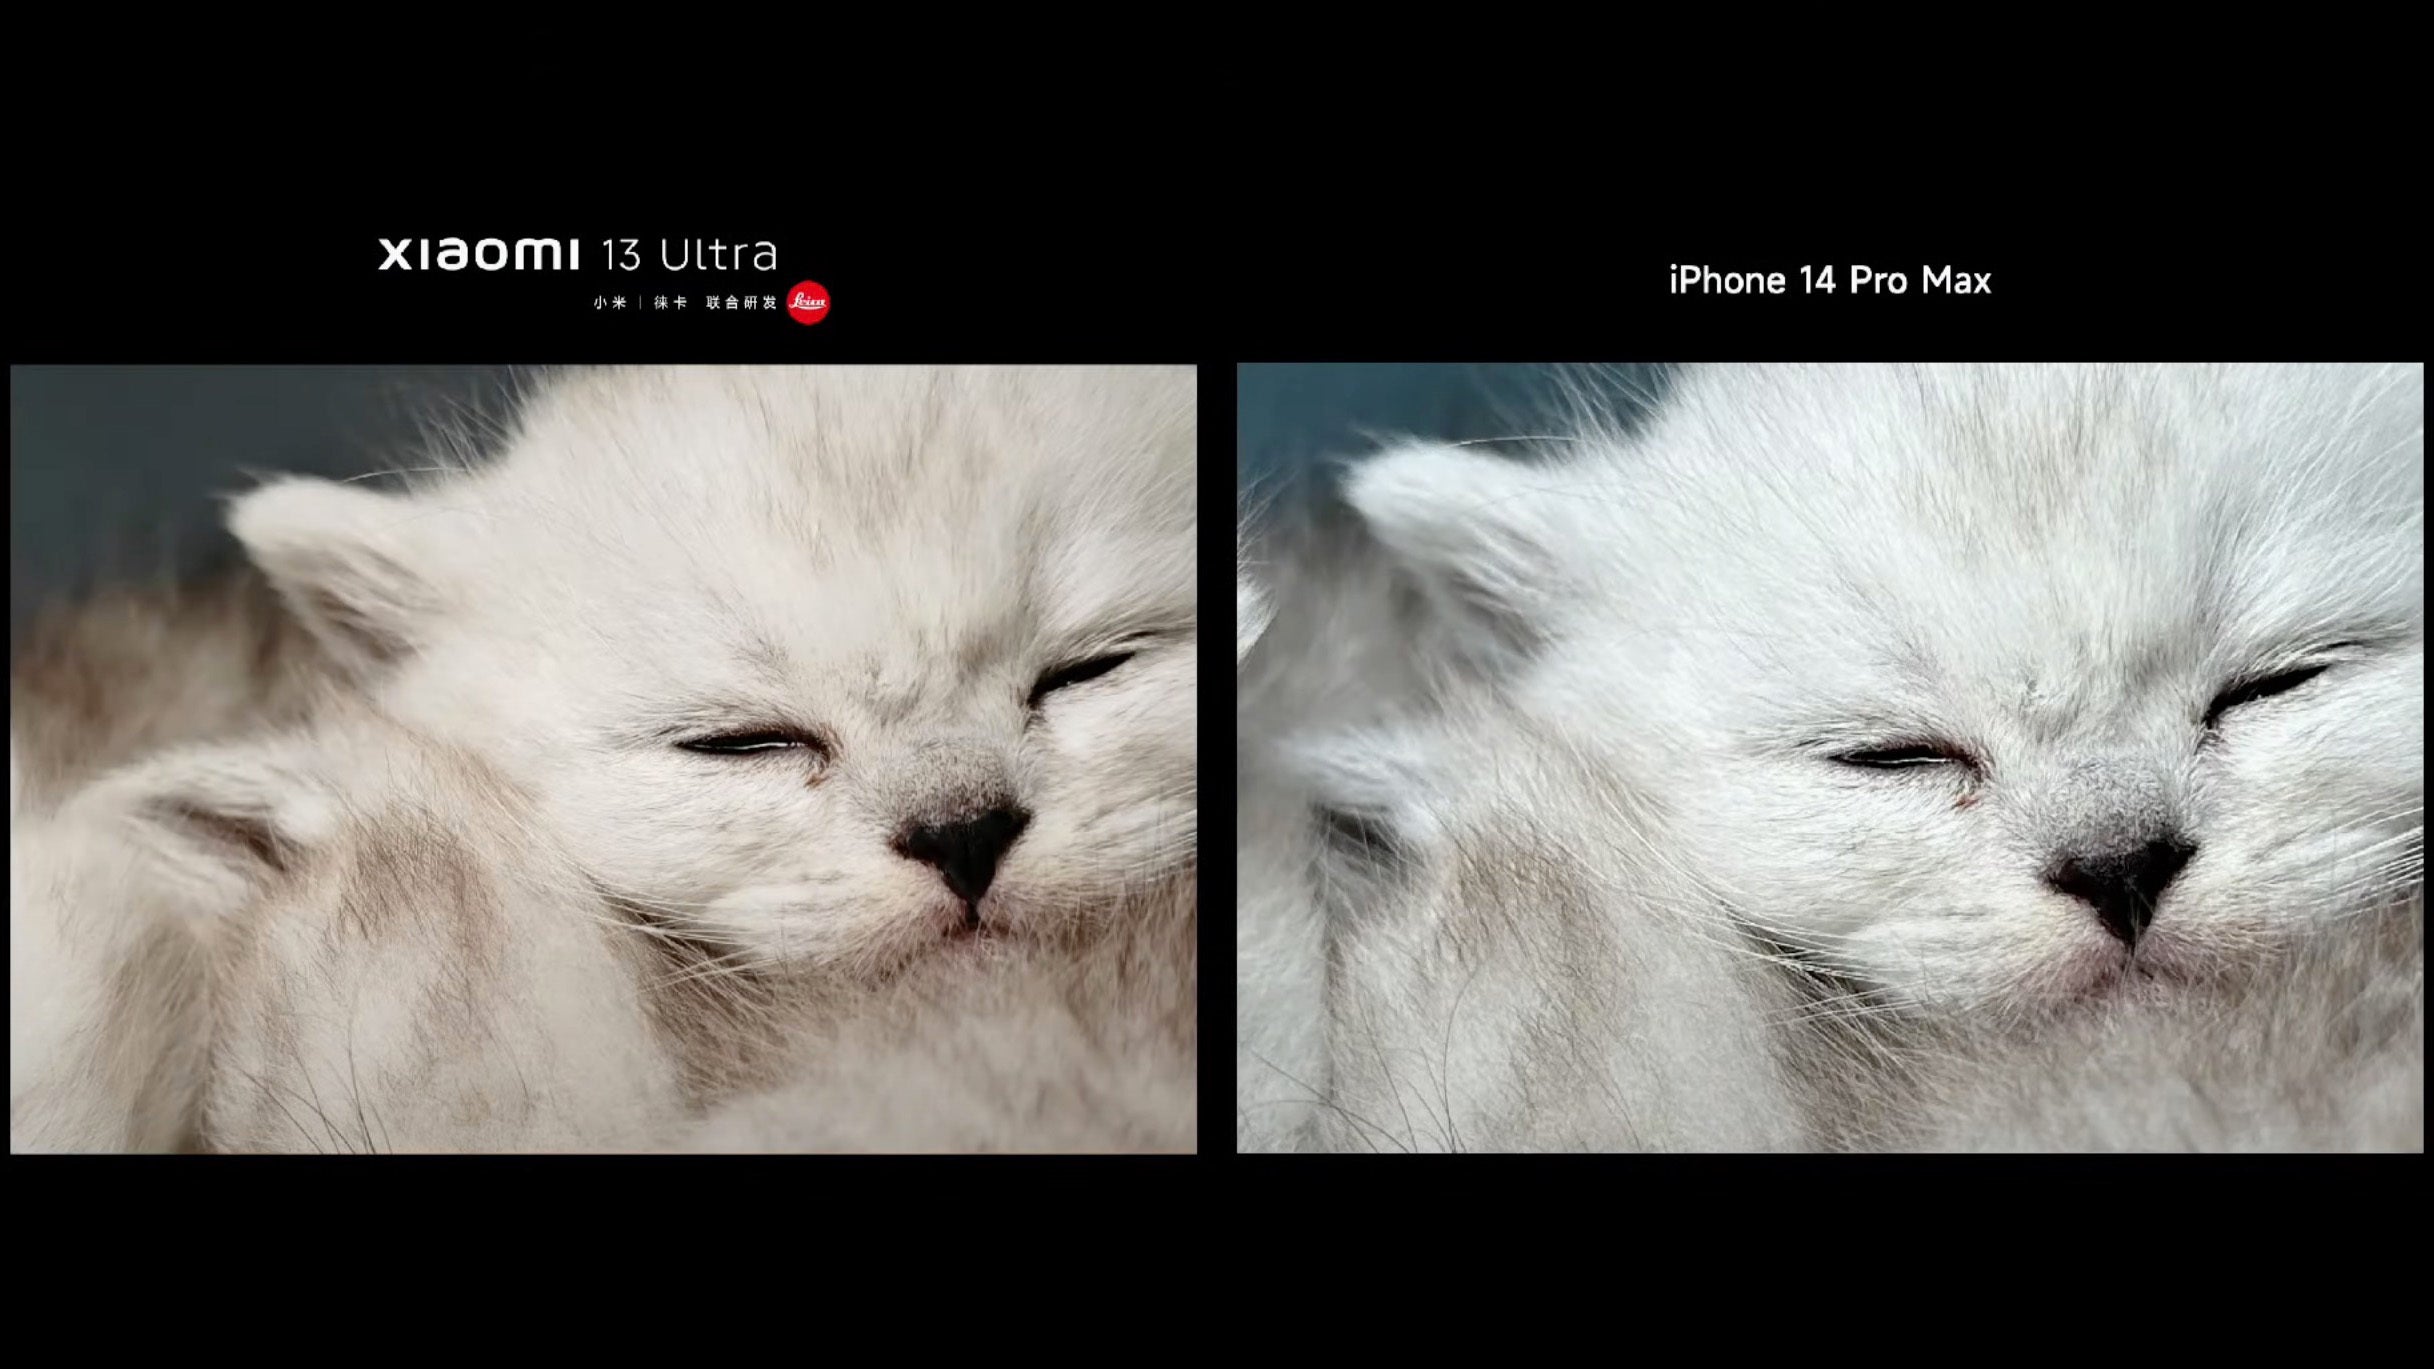 Rumors were true! Dream camera phone Xiaomi 13 Ultra coming to life with  Leica inspired body - PhoneArena